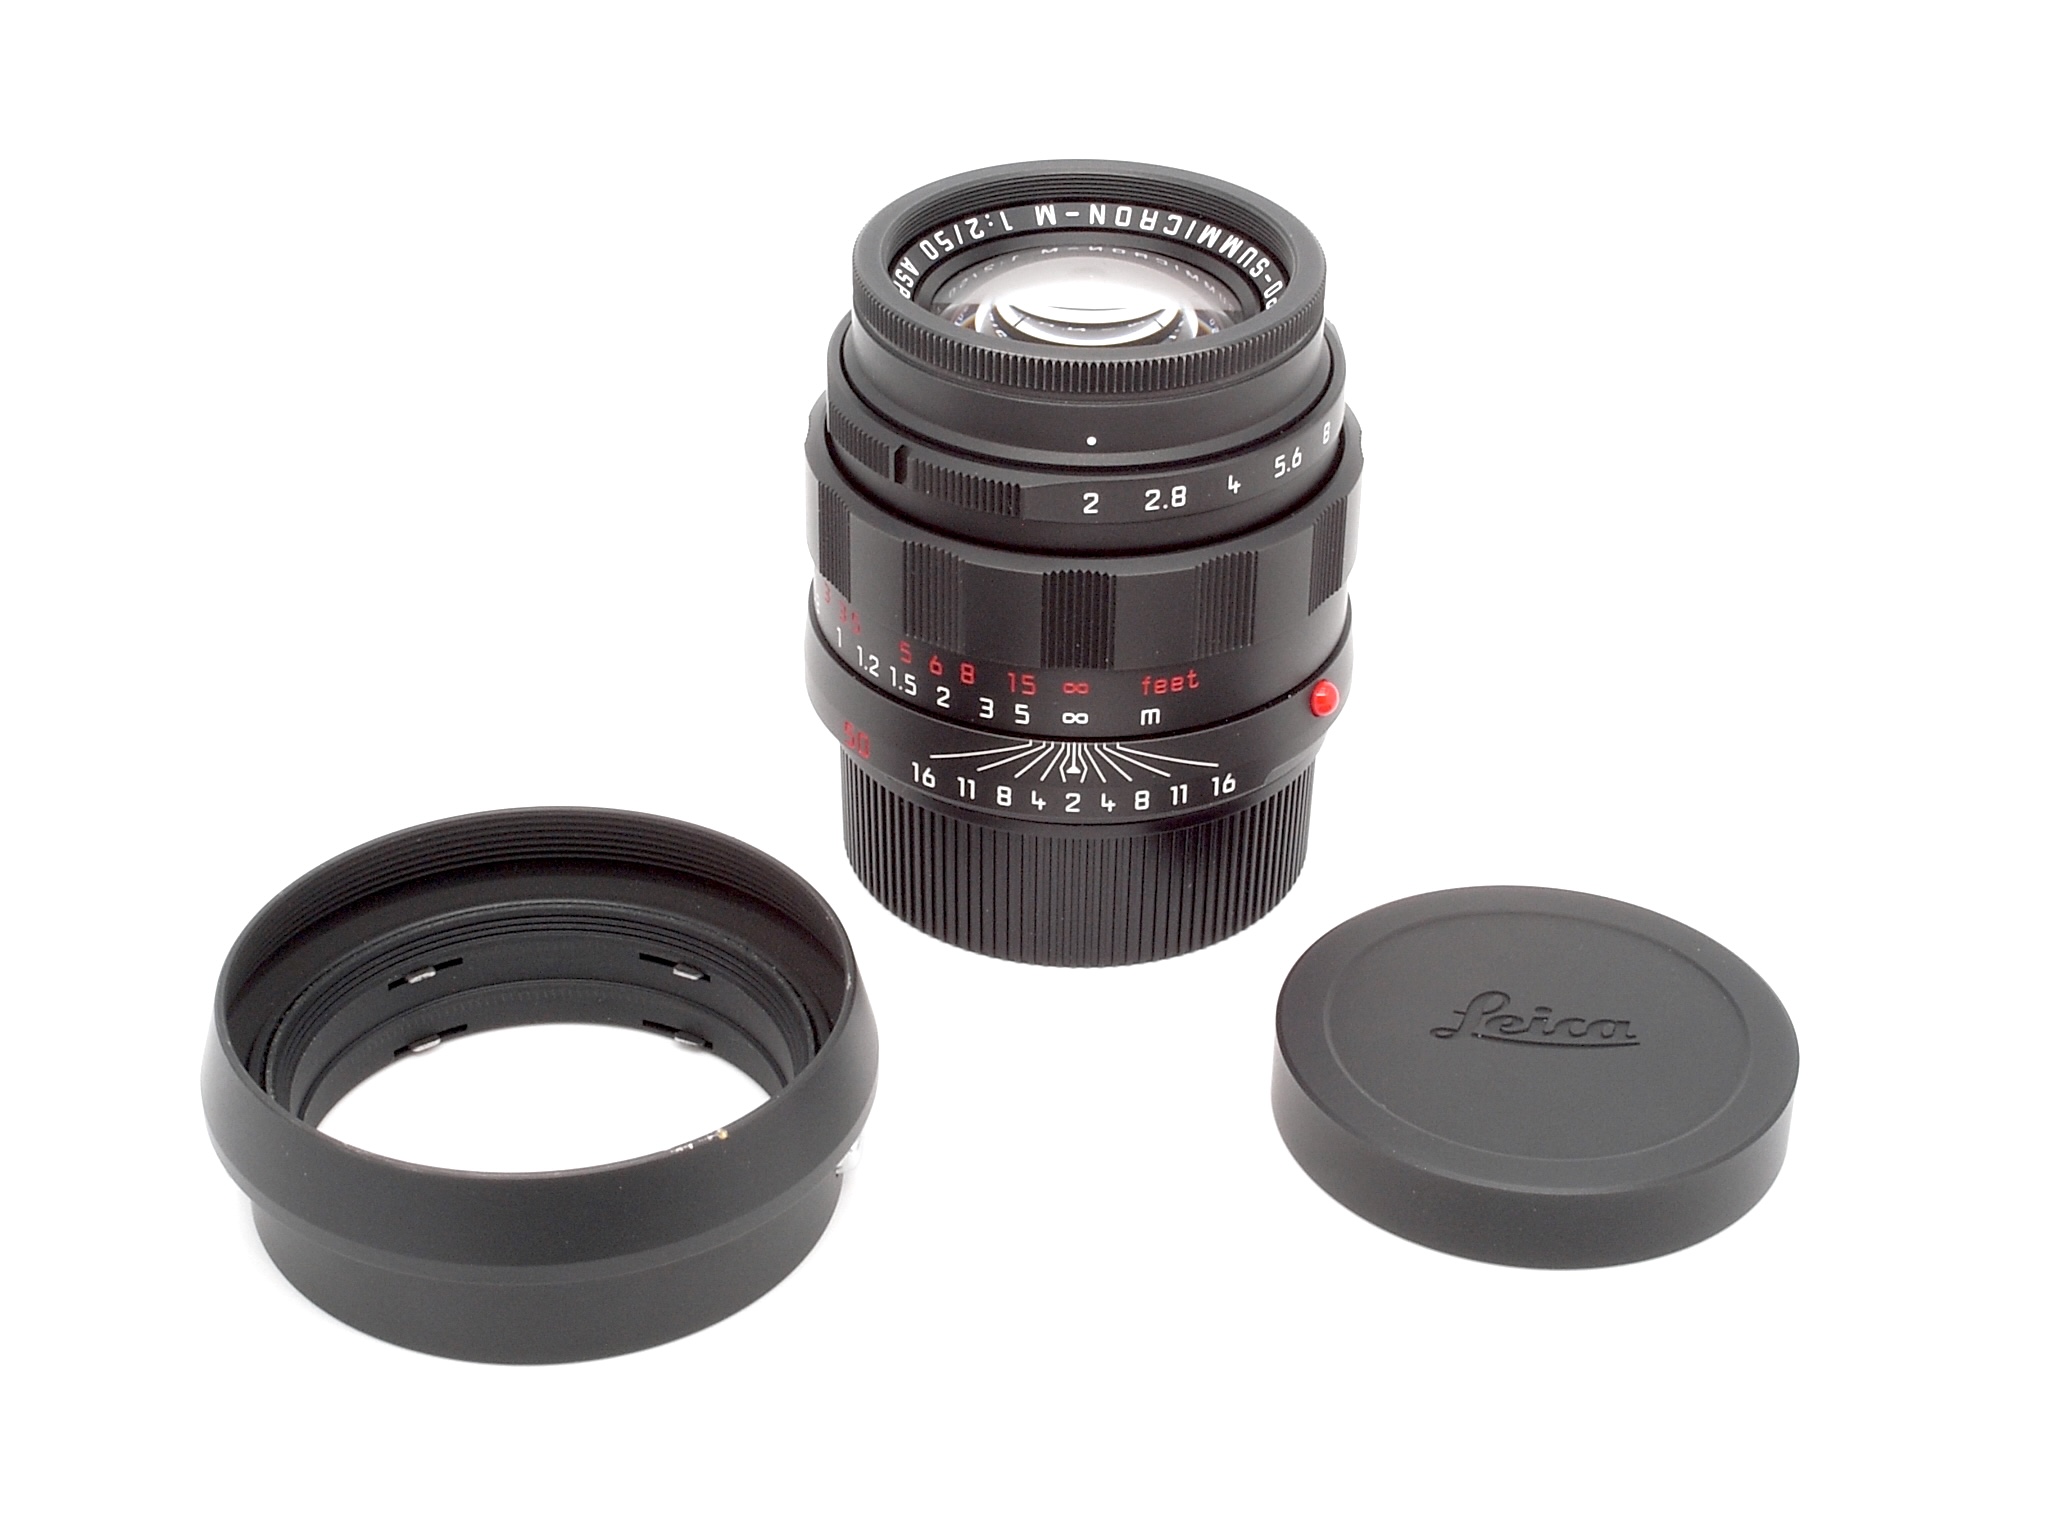 Leica APO-Summicron-M 2,0/50 ASPH. black chrome finish